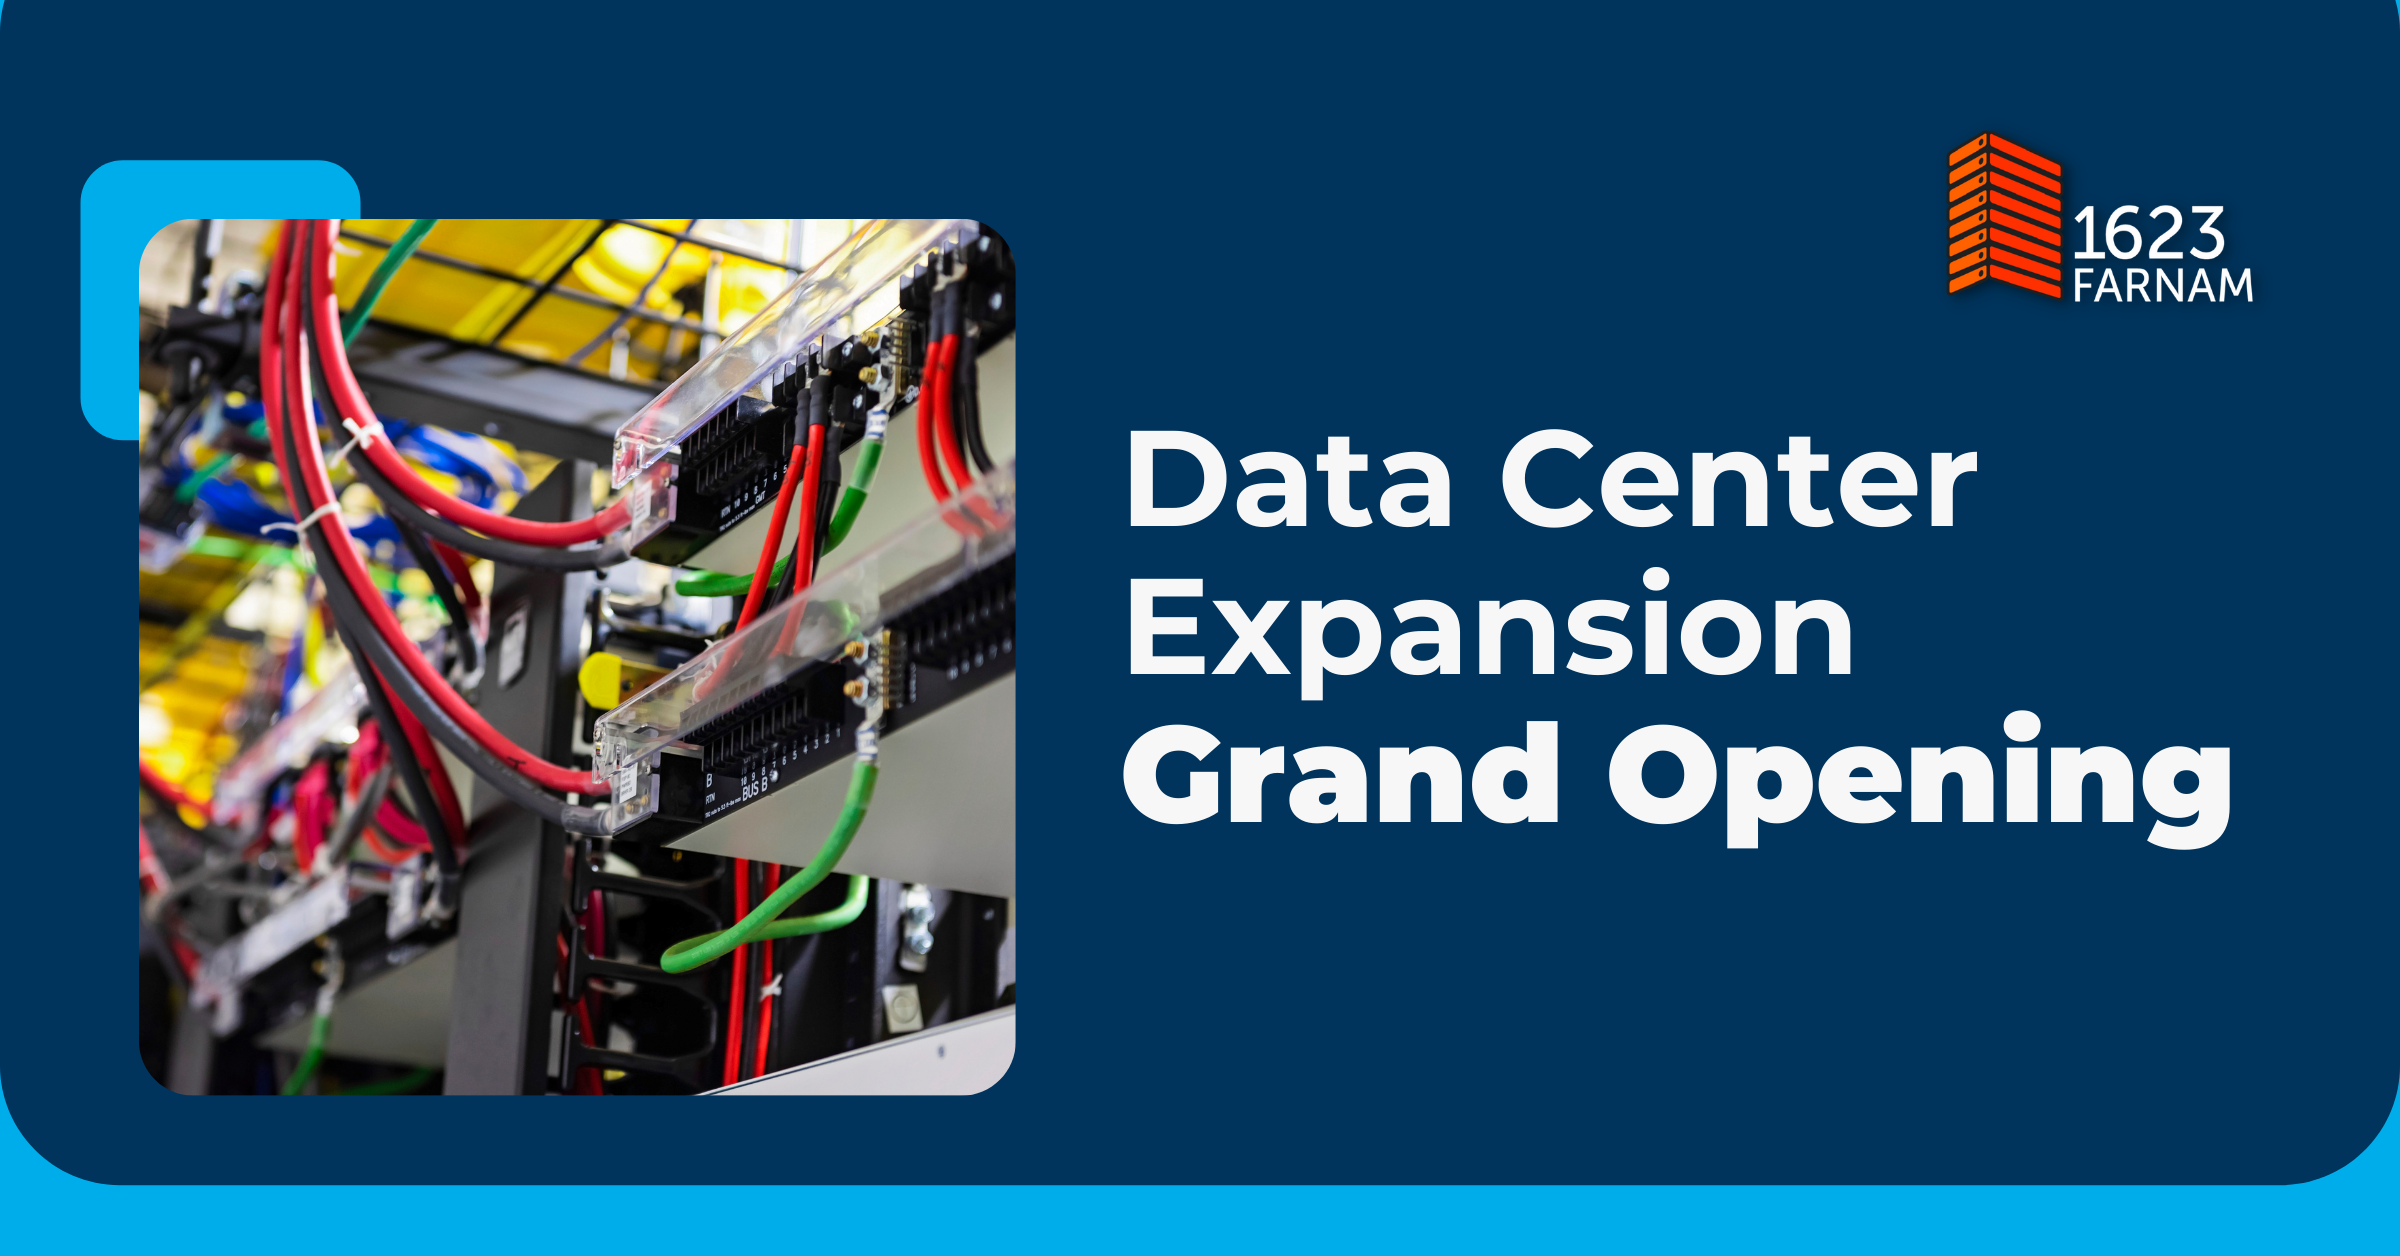 1623 Farnam Announces Data Center Expansion Grand Opening